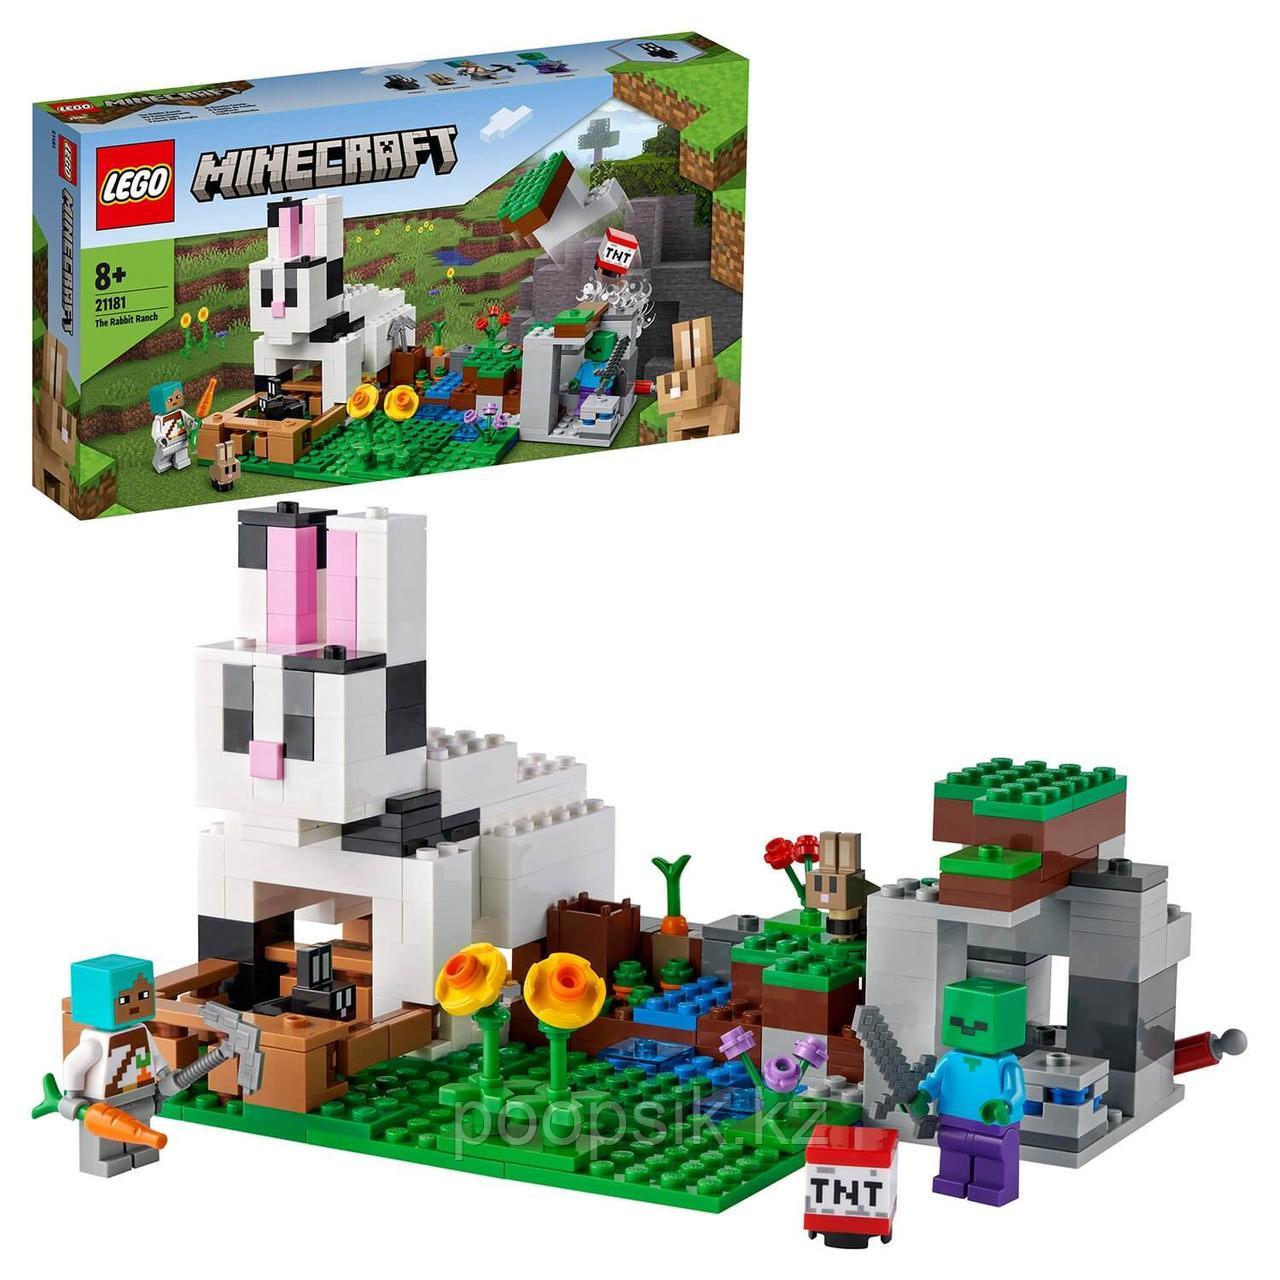 Lego Minecraft Кроличье ранчо 21181